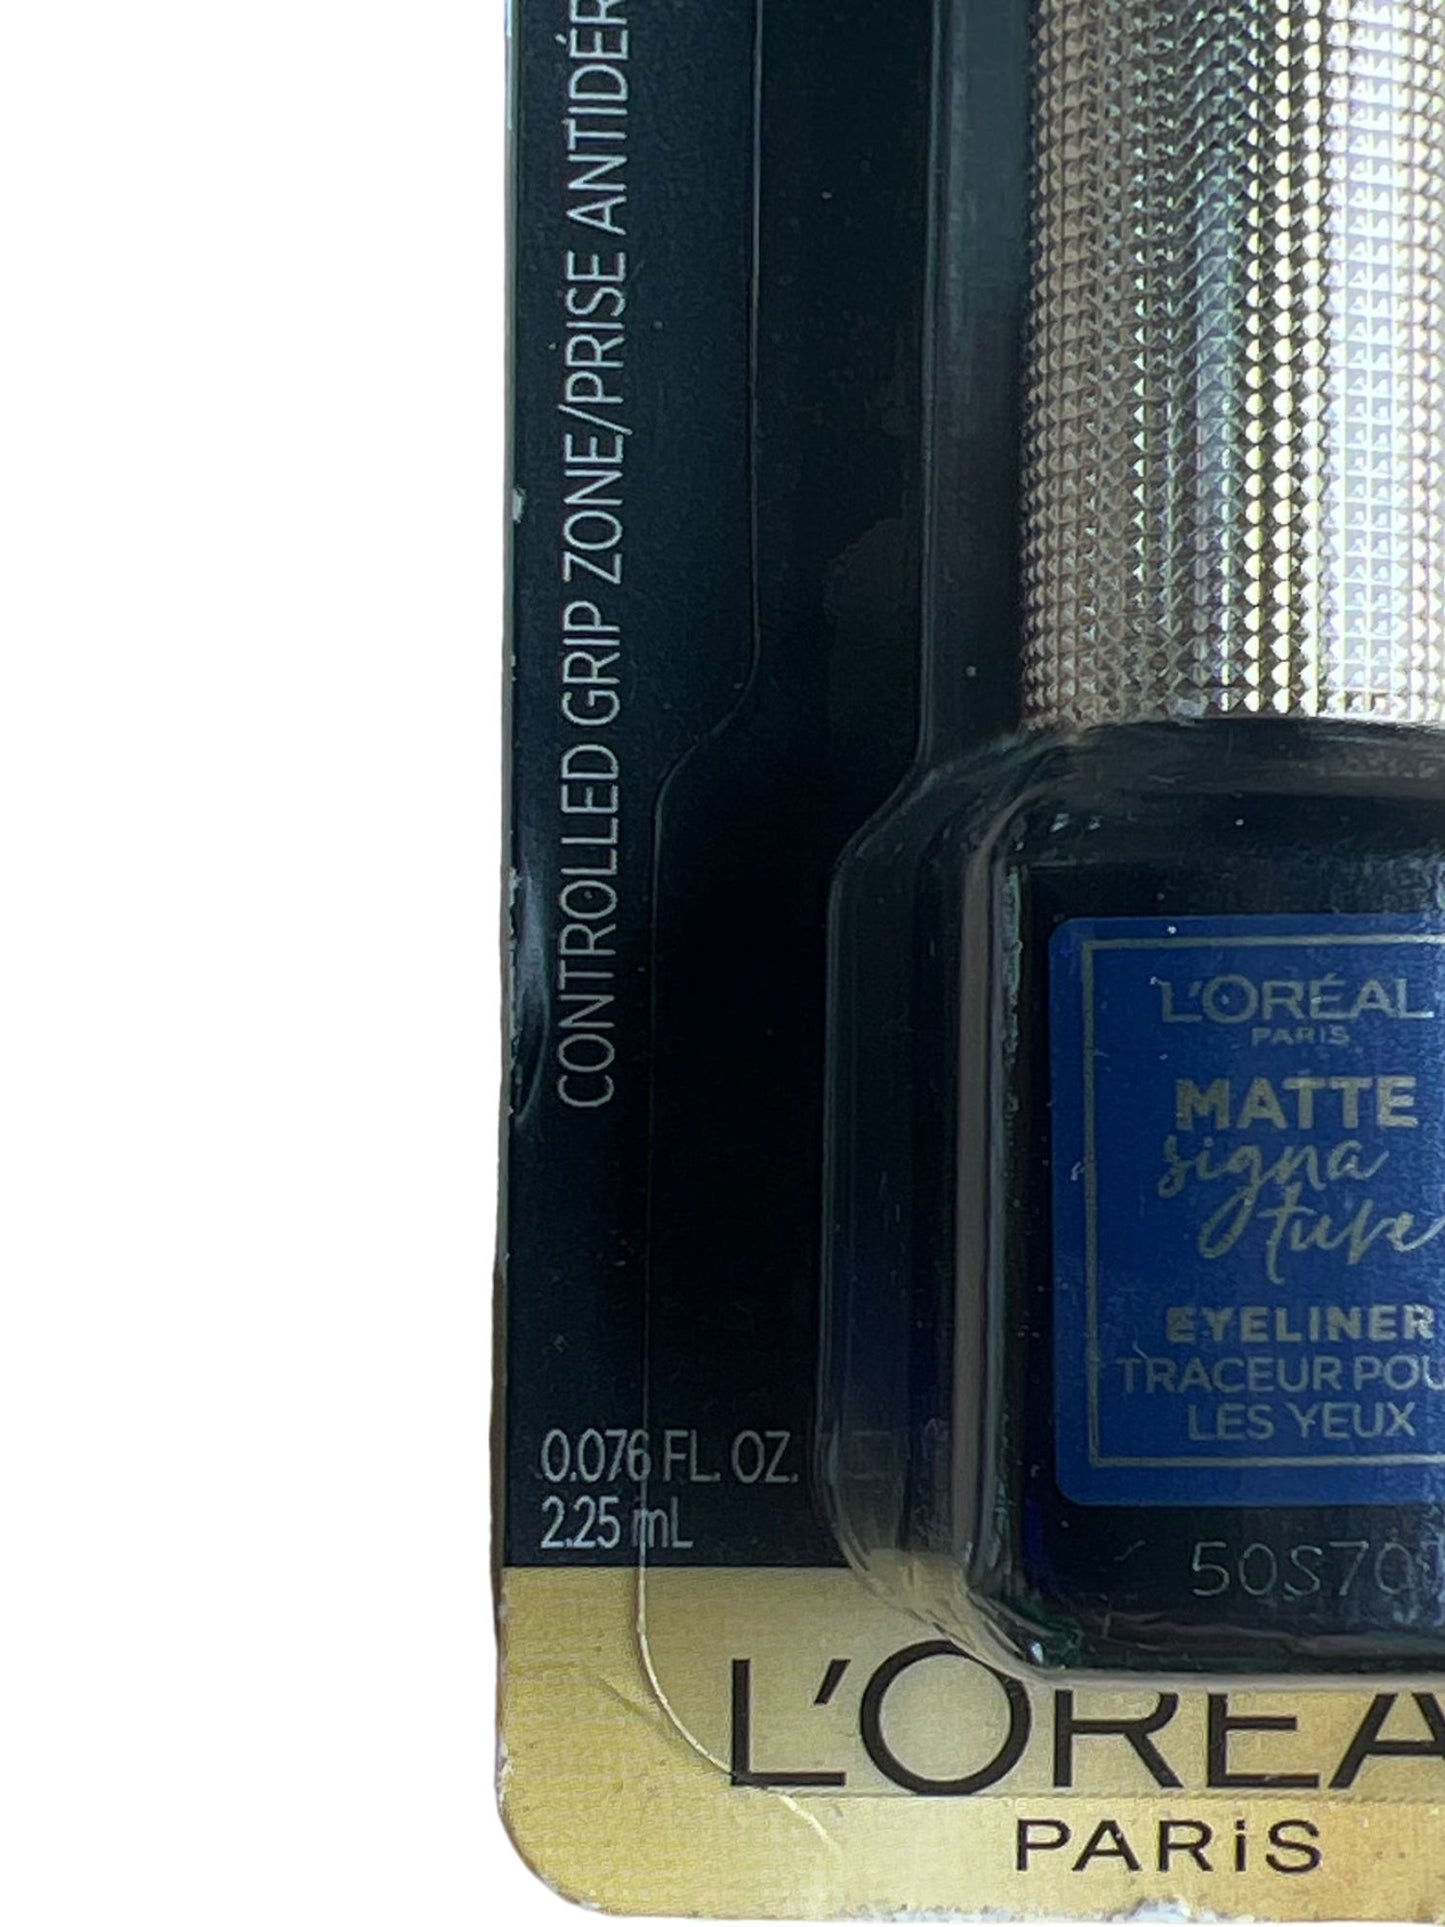 L'OREAL Paris Blue Matte Signature Liquid Eyeliner Waterproof, 710 Blue